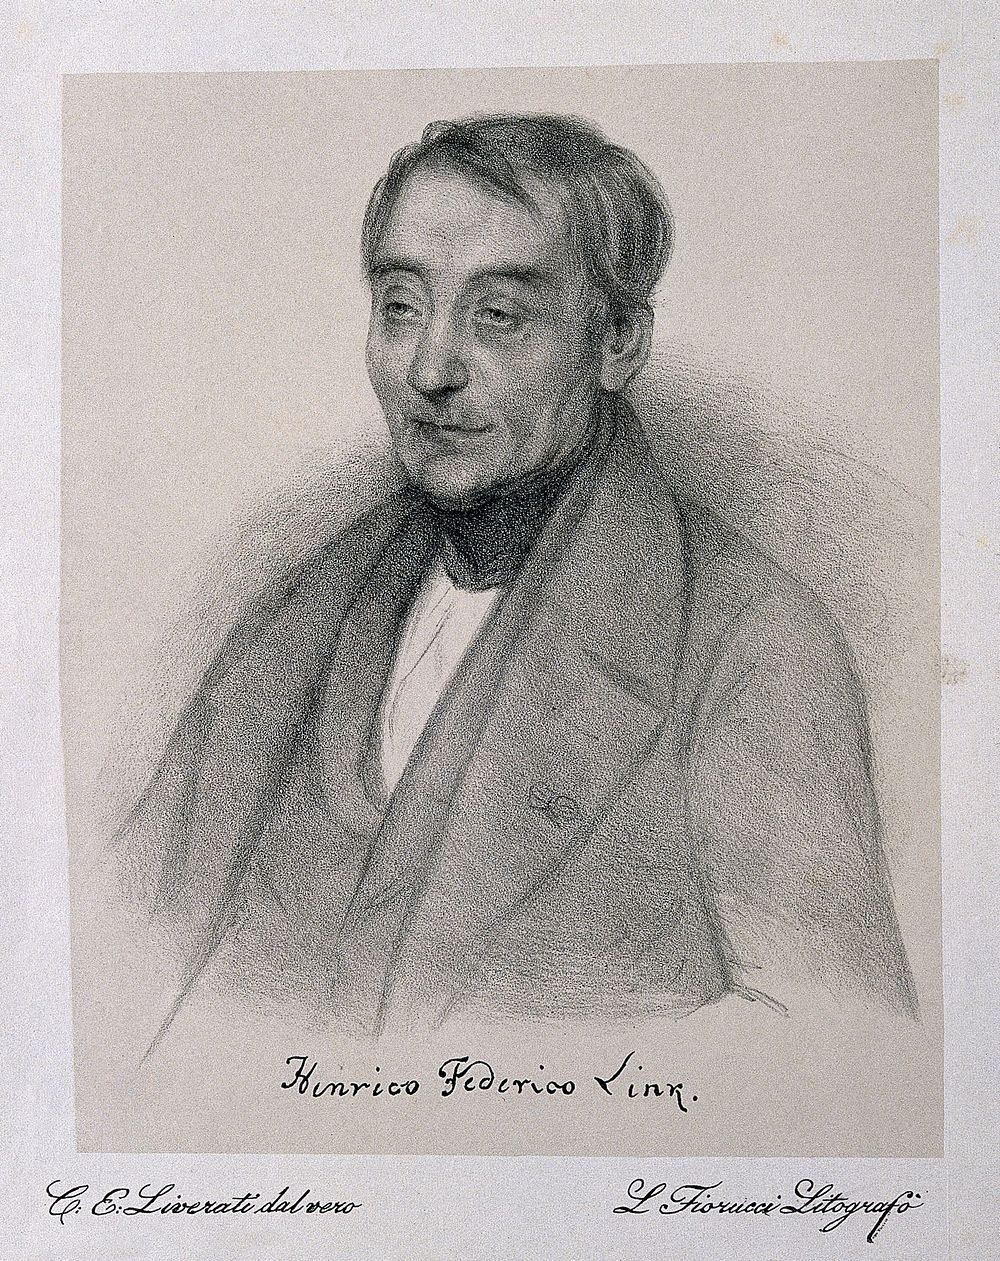 Heinrich Friedrich Link. Lithograph by L. Fiorucci after C. E. Liverati, 1841.